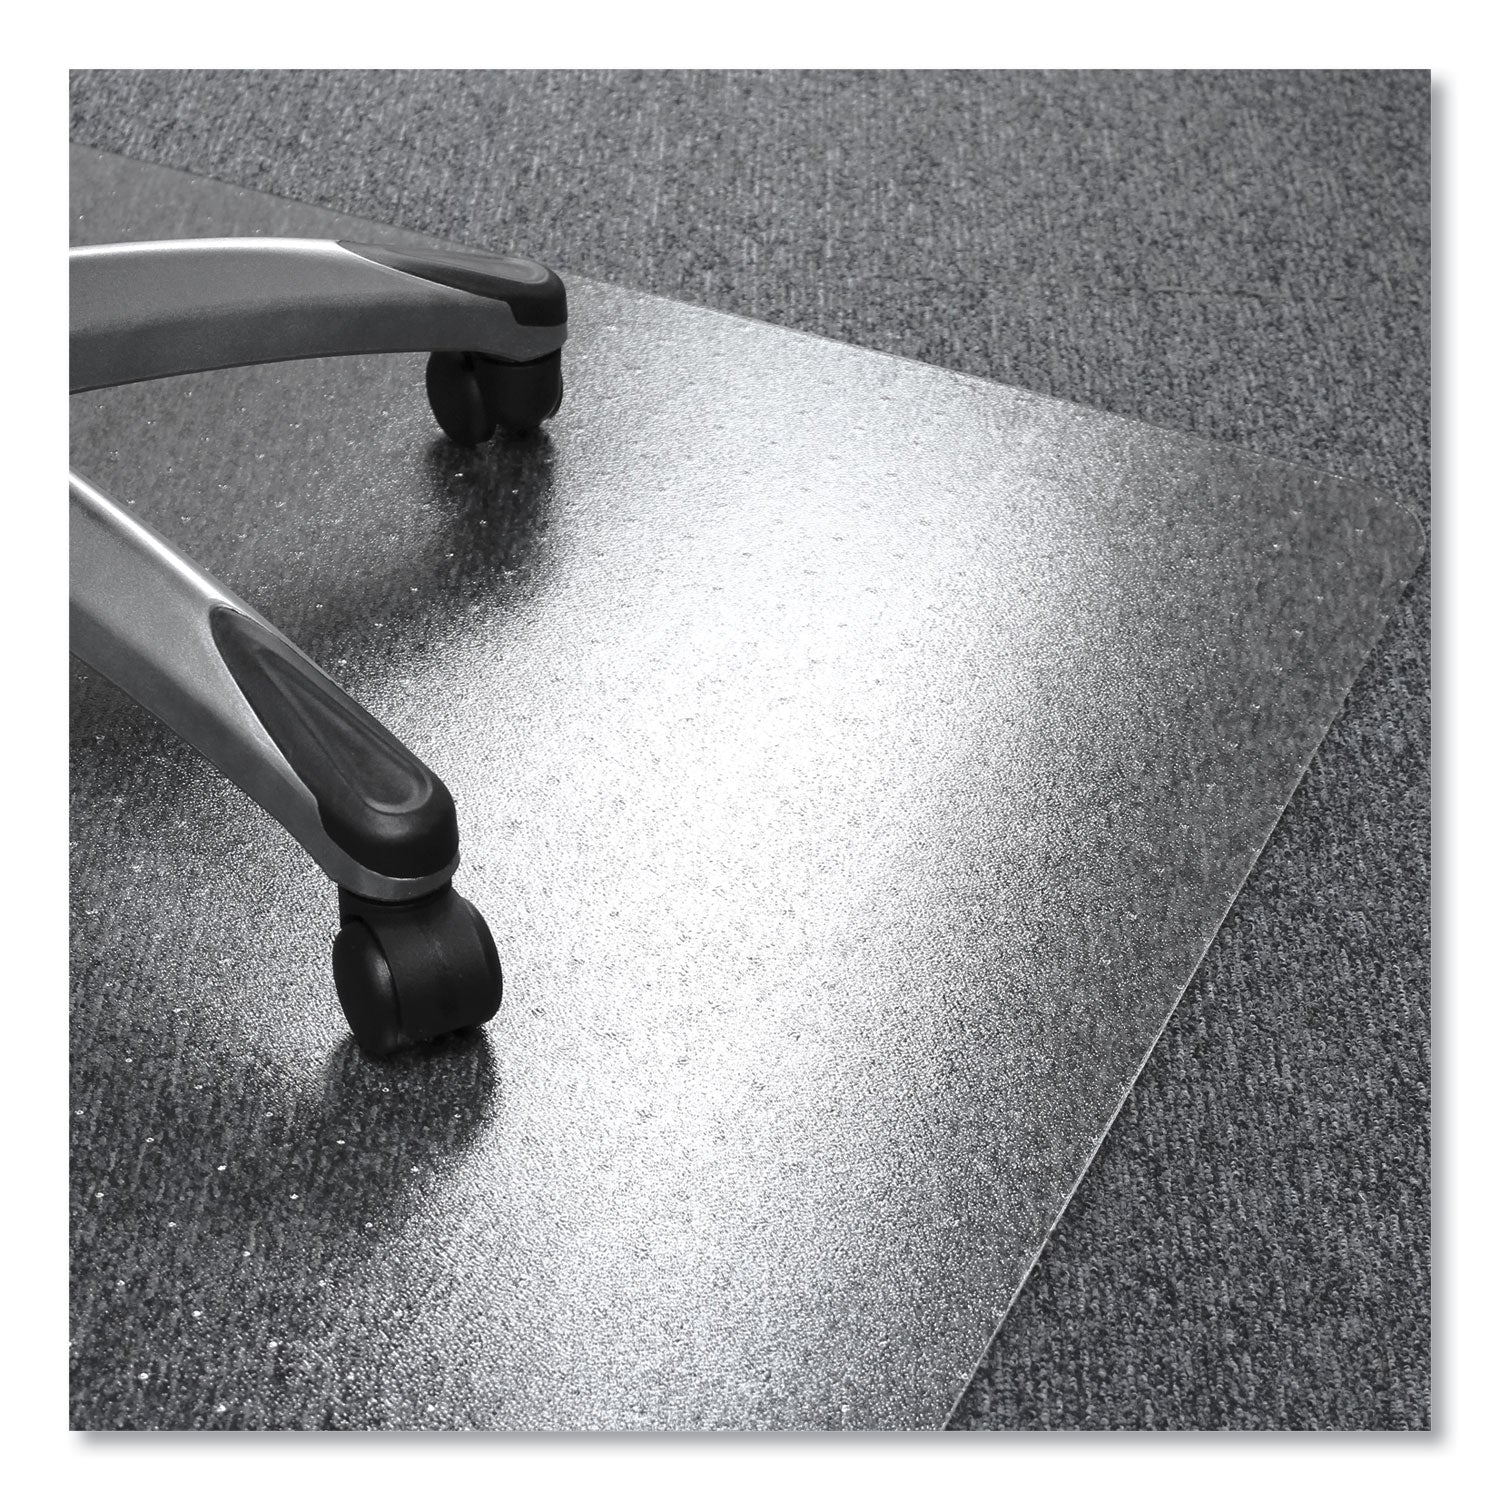 cleartex-ultimat-polycarbonate-chair-mat-for-low-medium-pile-carpet-48-x-53-clear_flrer1113423er - 2